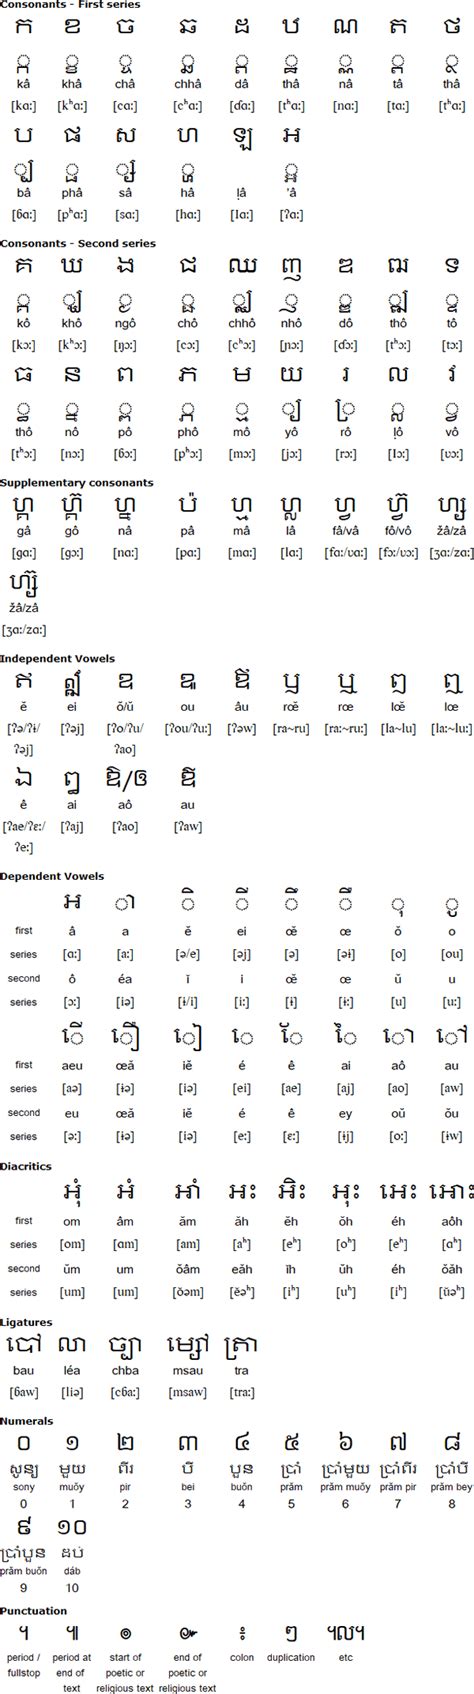 Khmer Cambodian Alphabet Pronunciation And Language